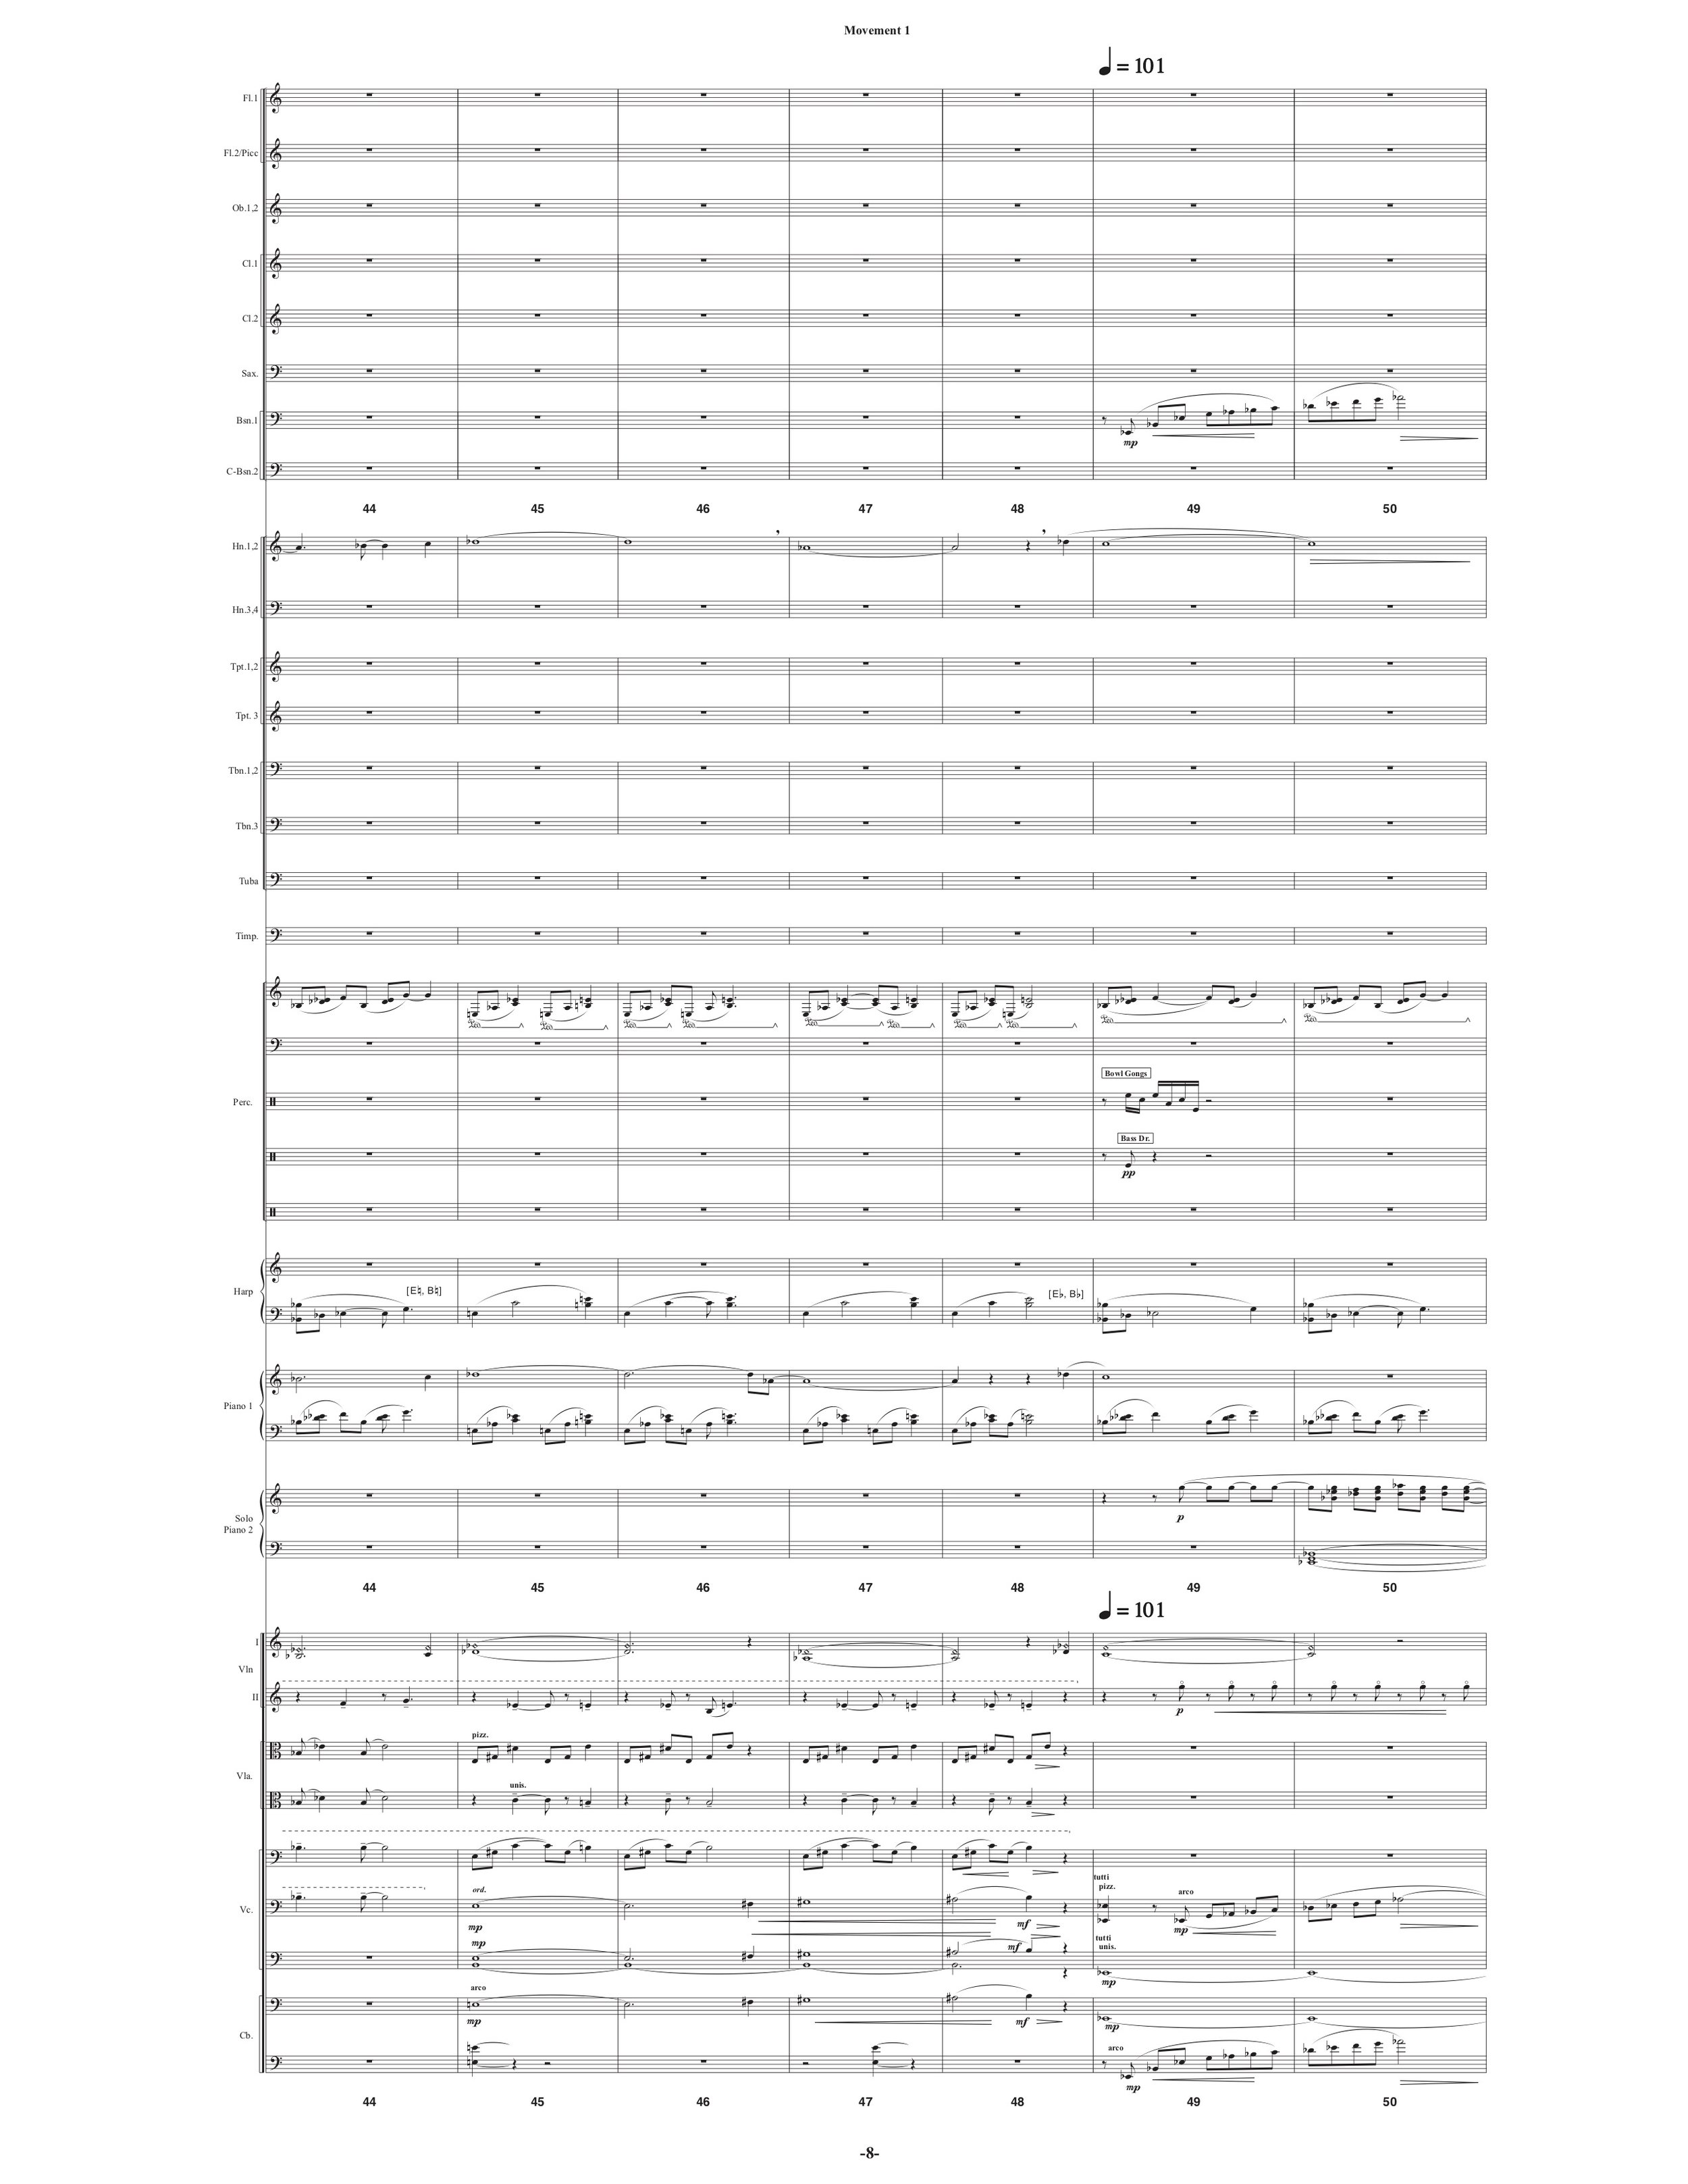 Symphony_Orch & 2 Pianos p13.jpg